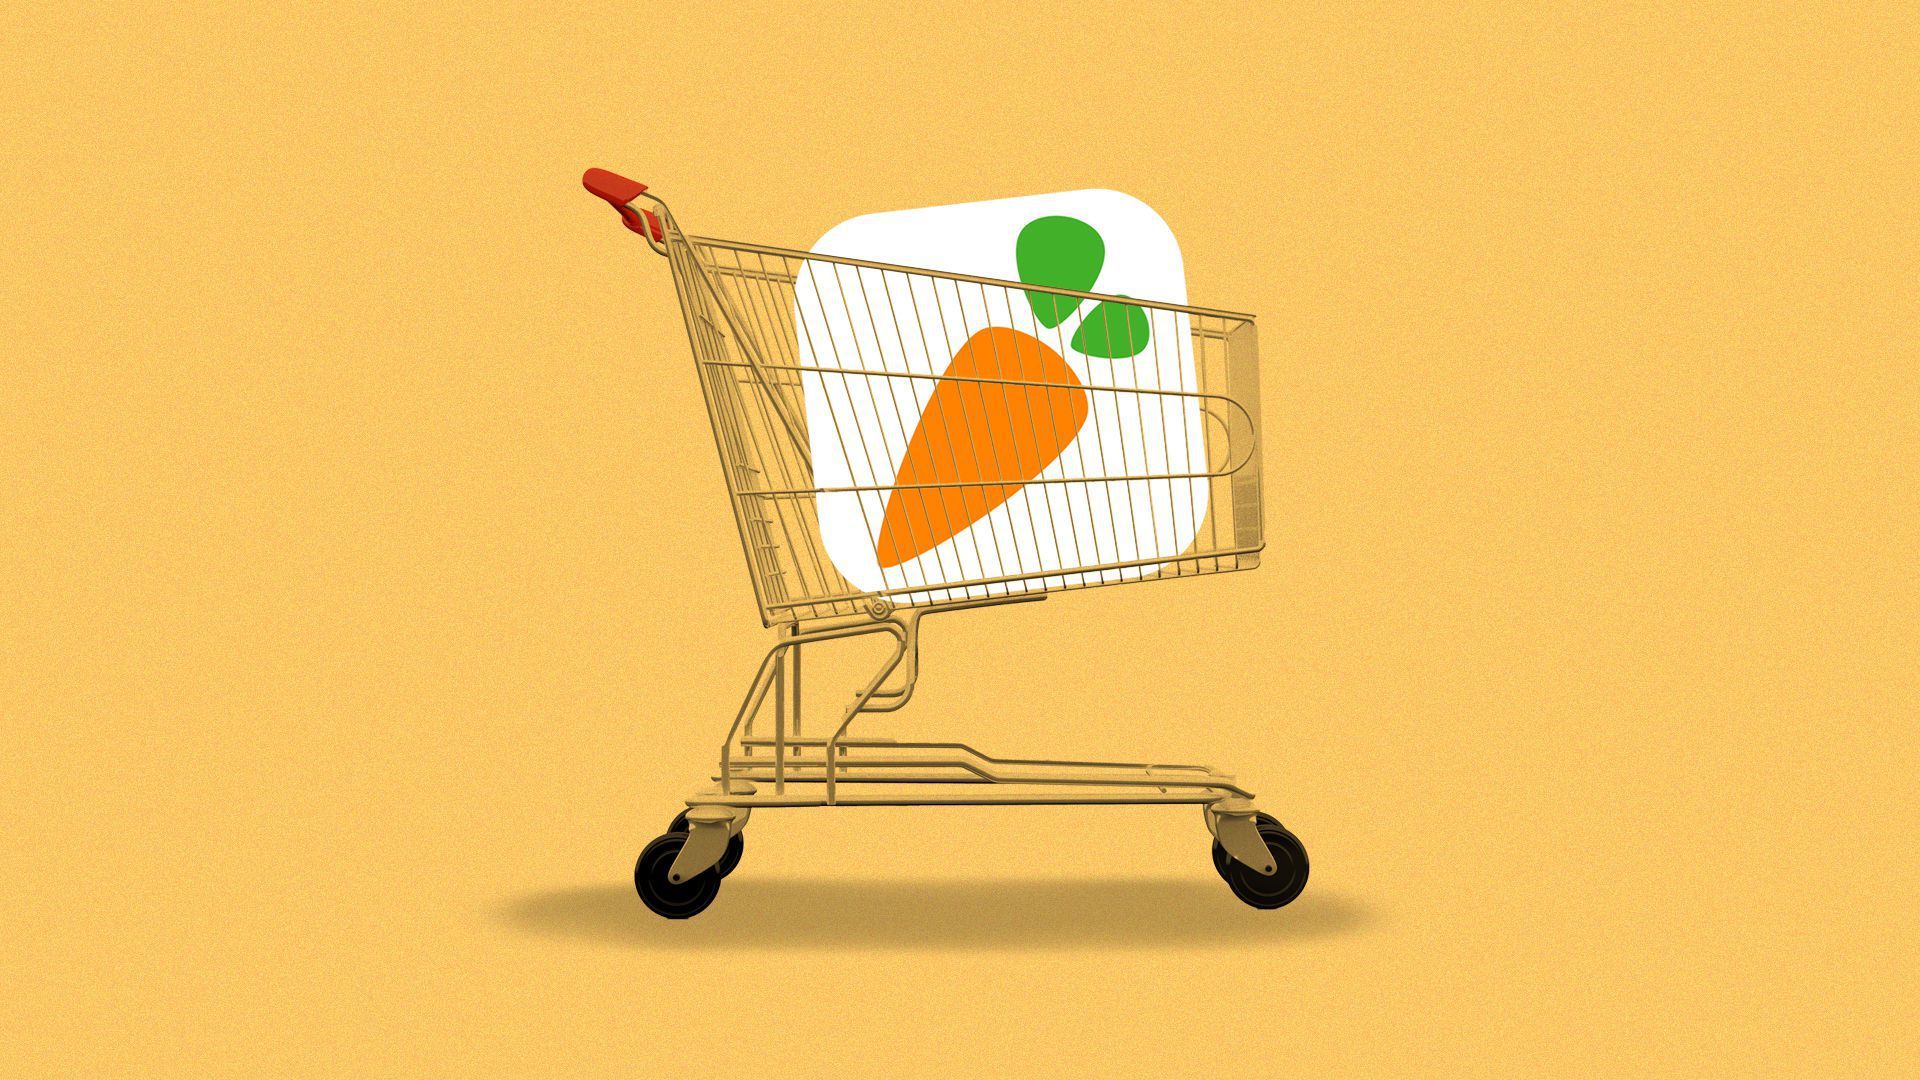 Instacart logo in a shopping cart